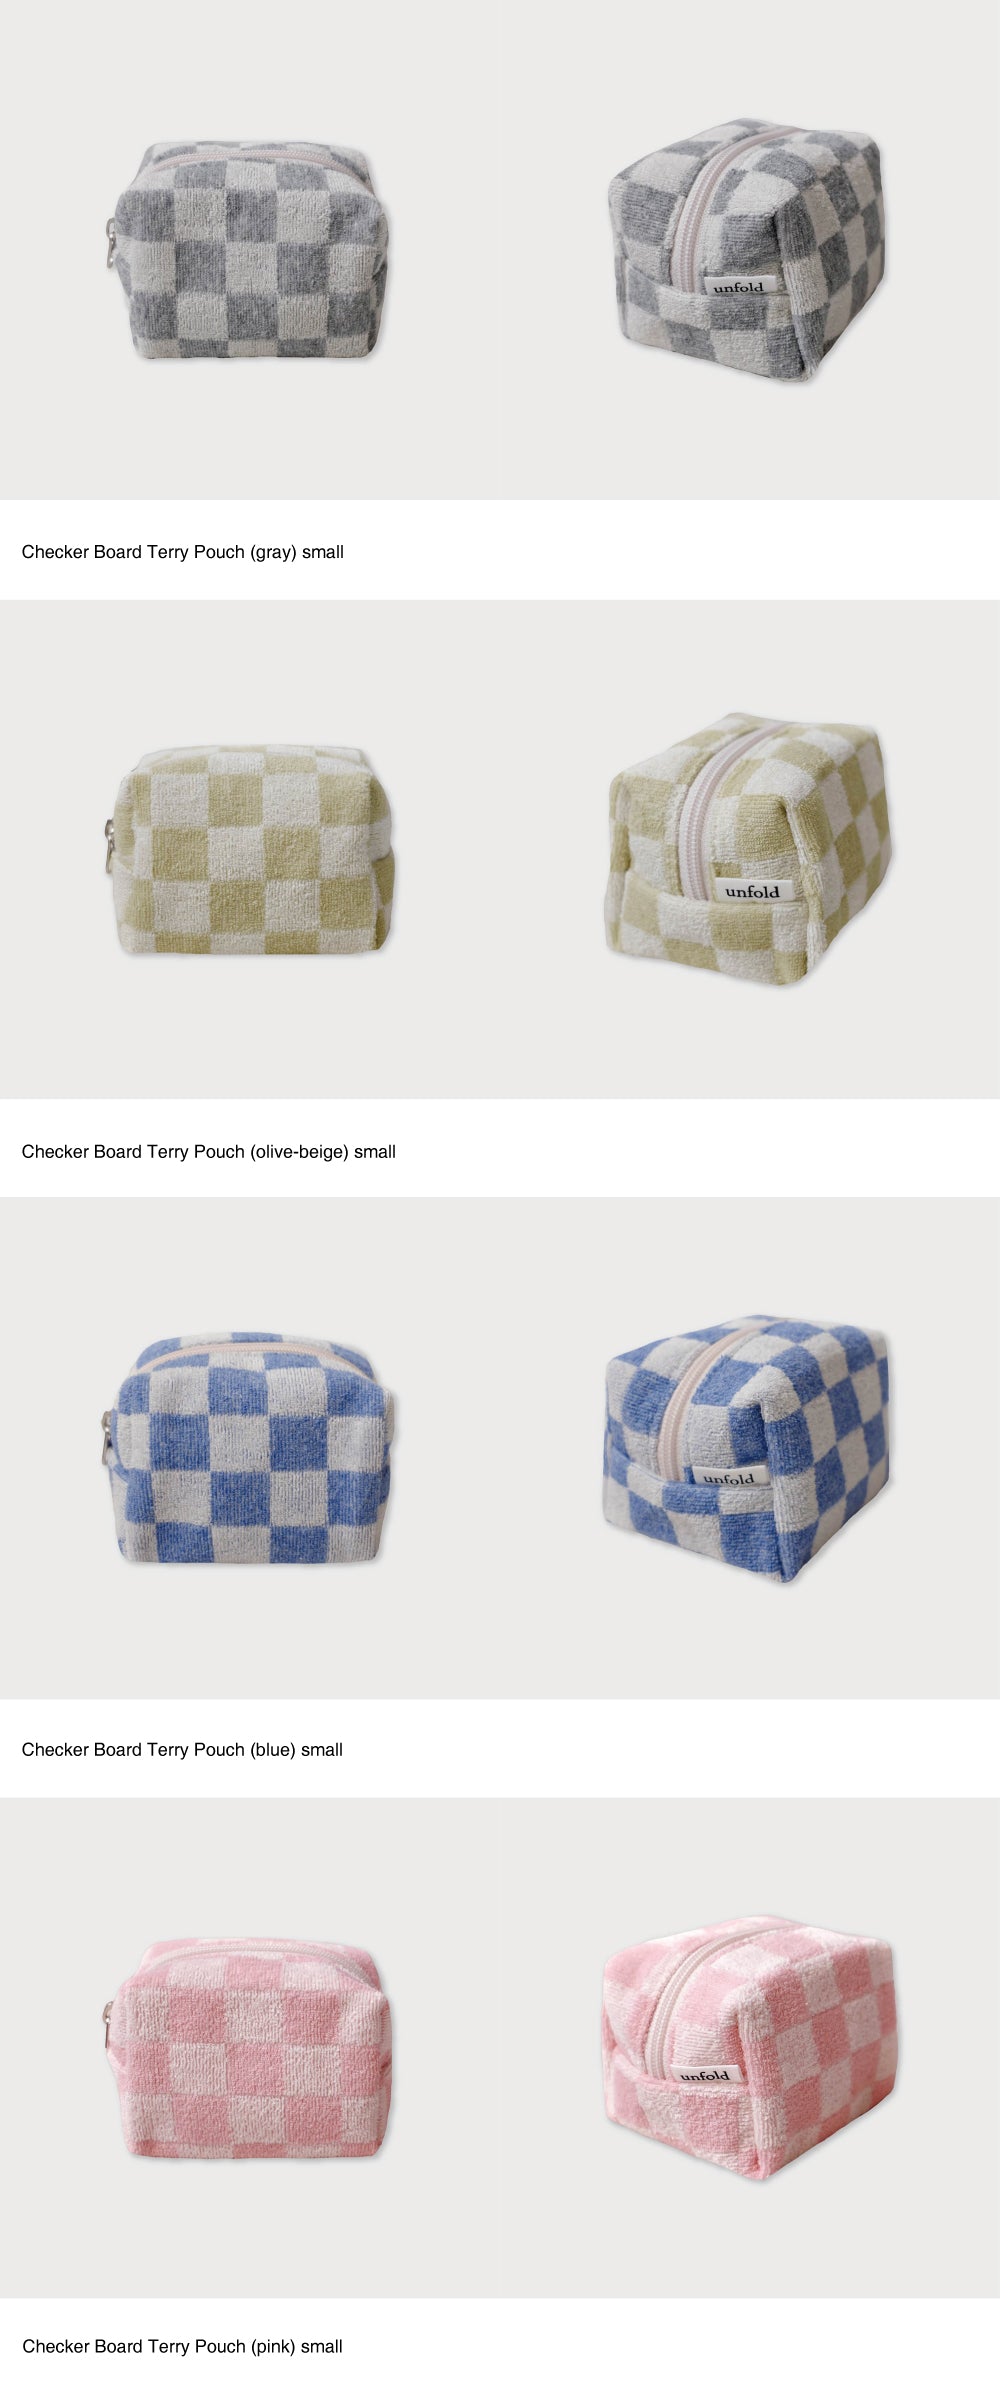 [unfold] Checker Board Terry Pouch - Small (4colors)